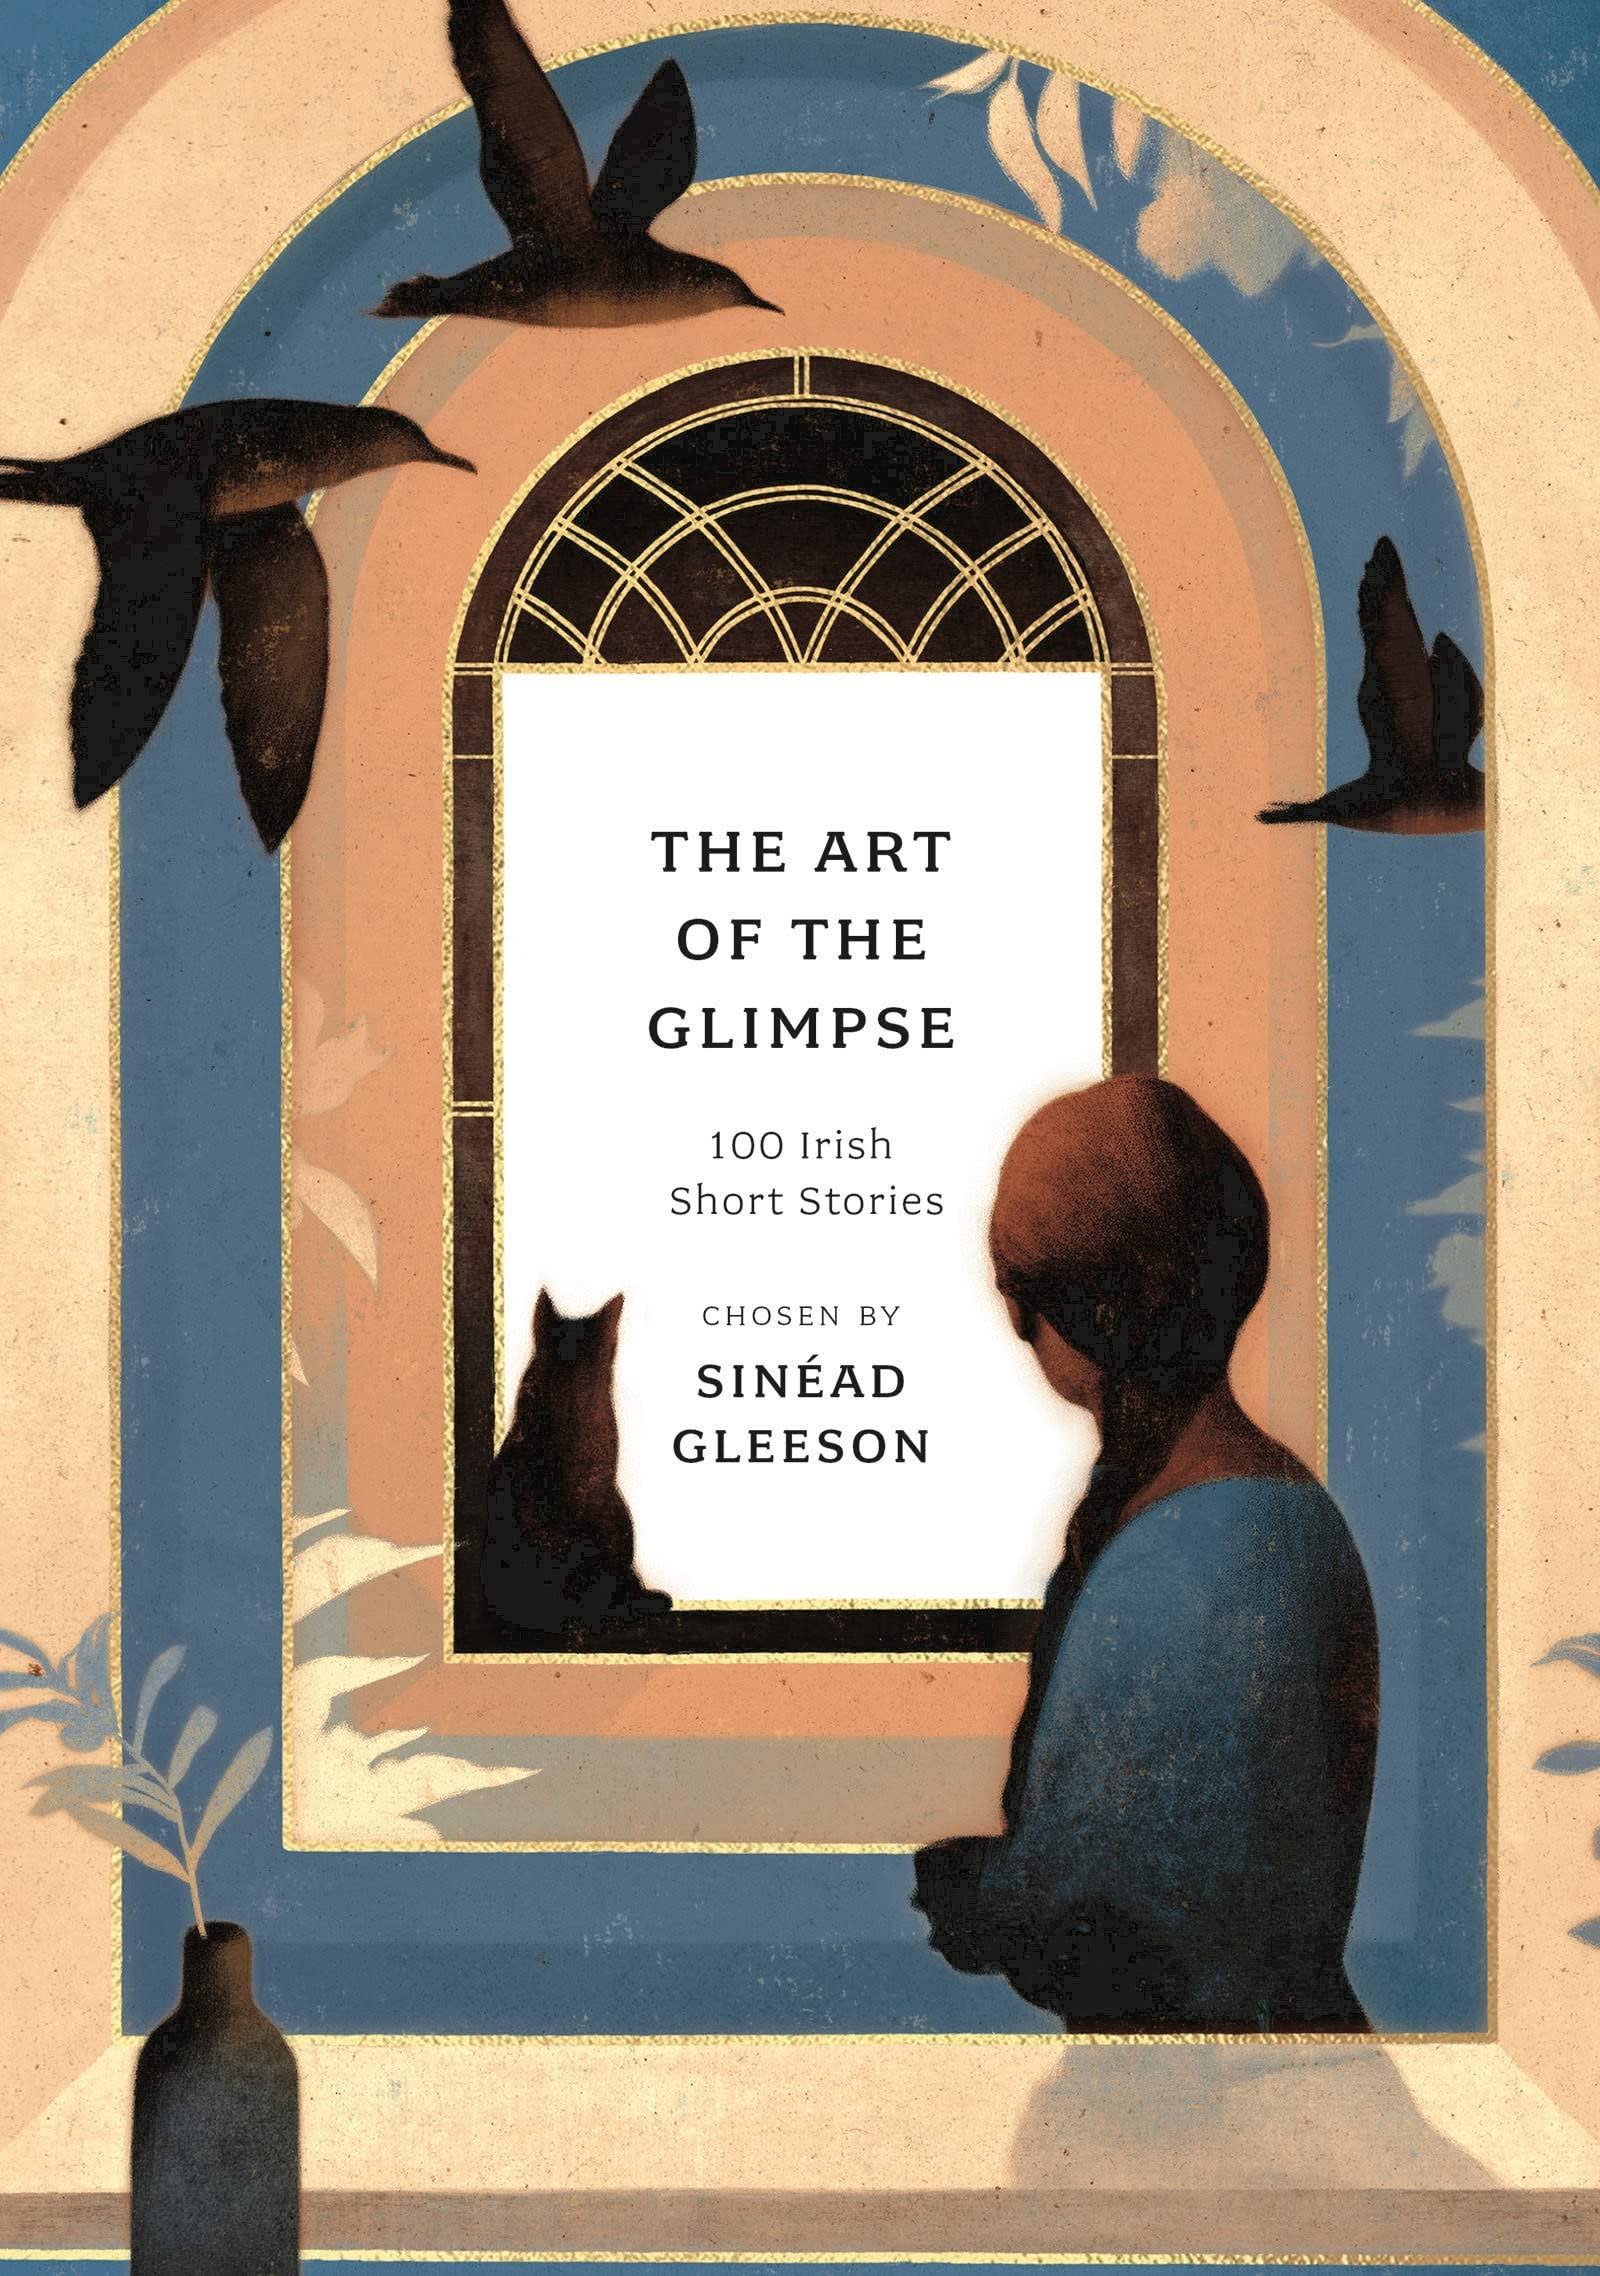 The Art of the Glimpse: 100 Irish Short Stories [Book]